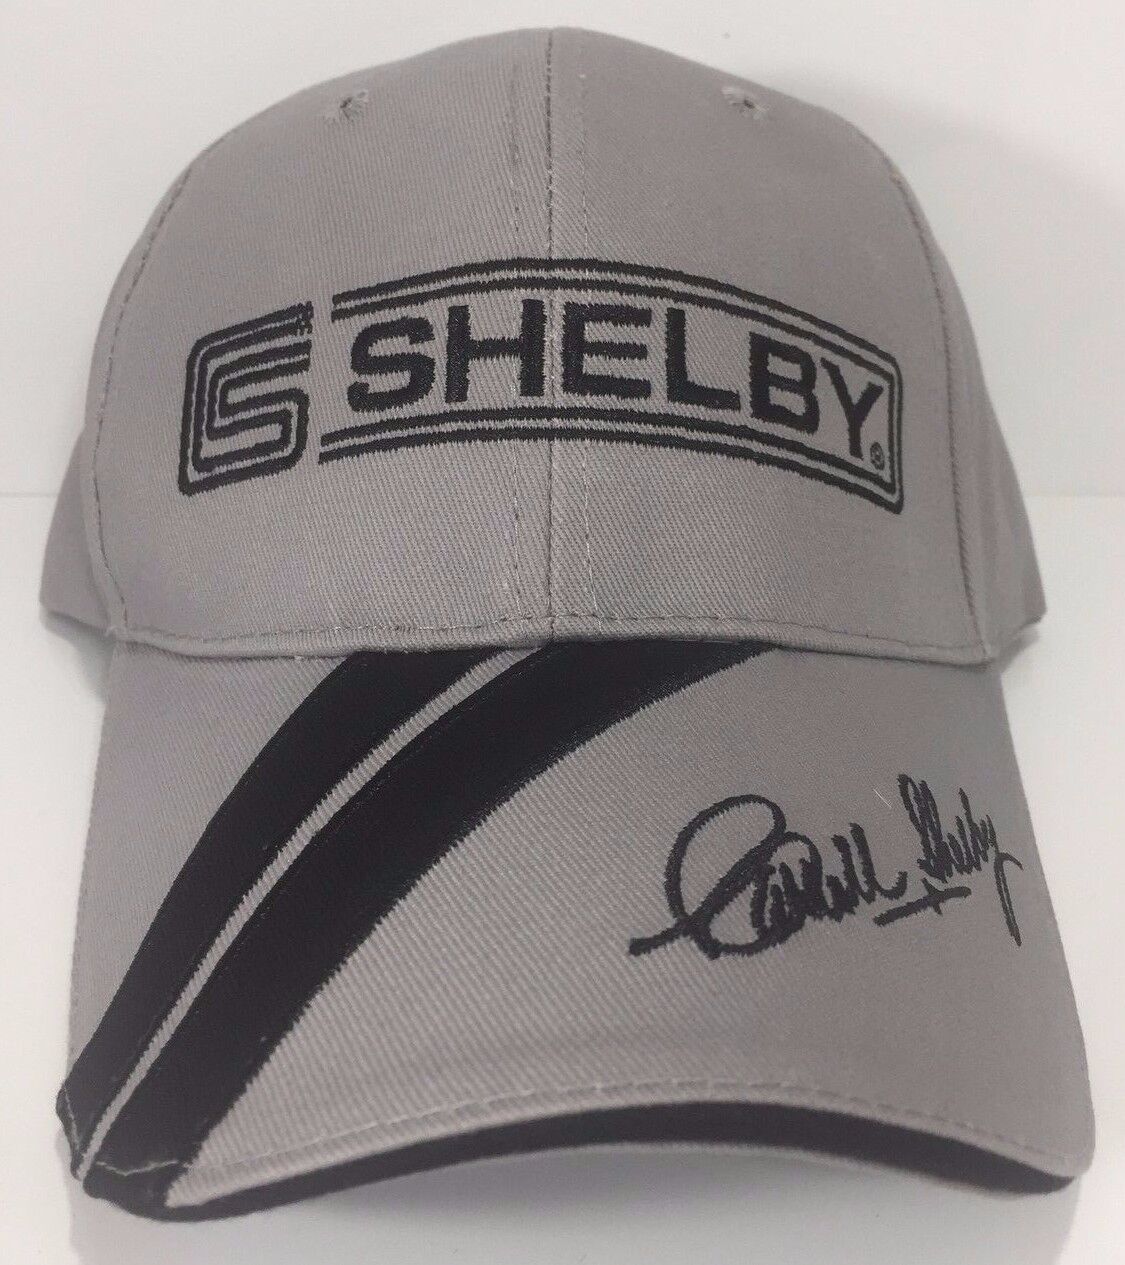 Carroll Shelby Hat / Cap - Gray & Black W/ Caroll Shelby Signature GT350 / GT500